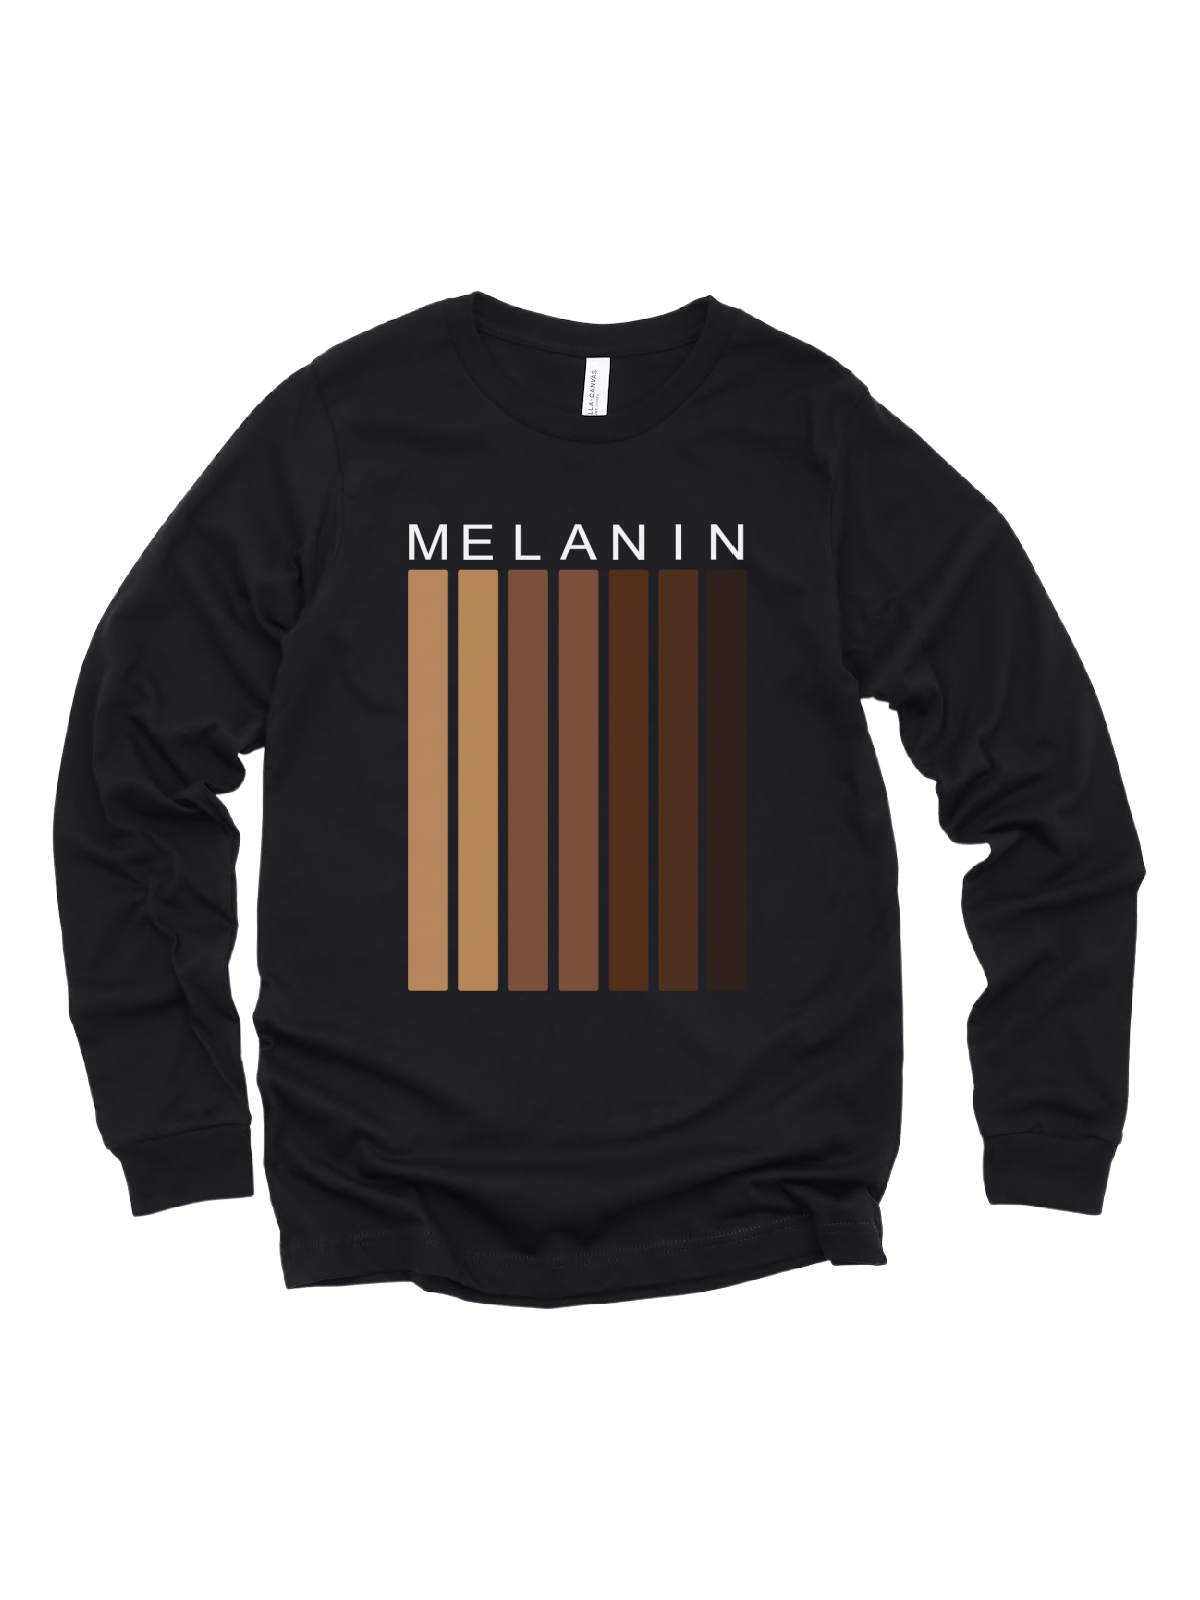 Shades of Melanin Adult Black History Shirt